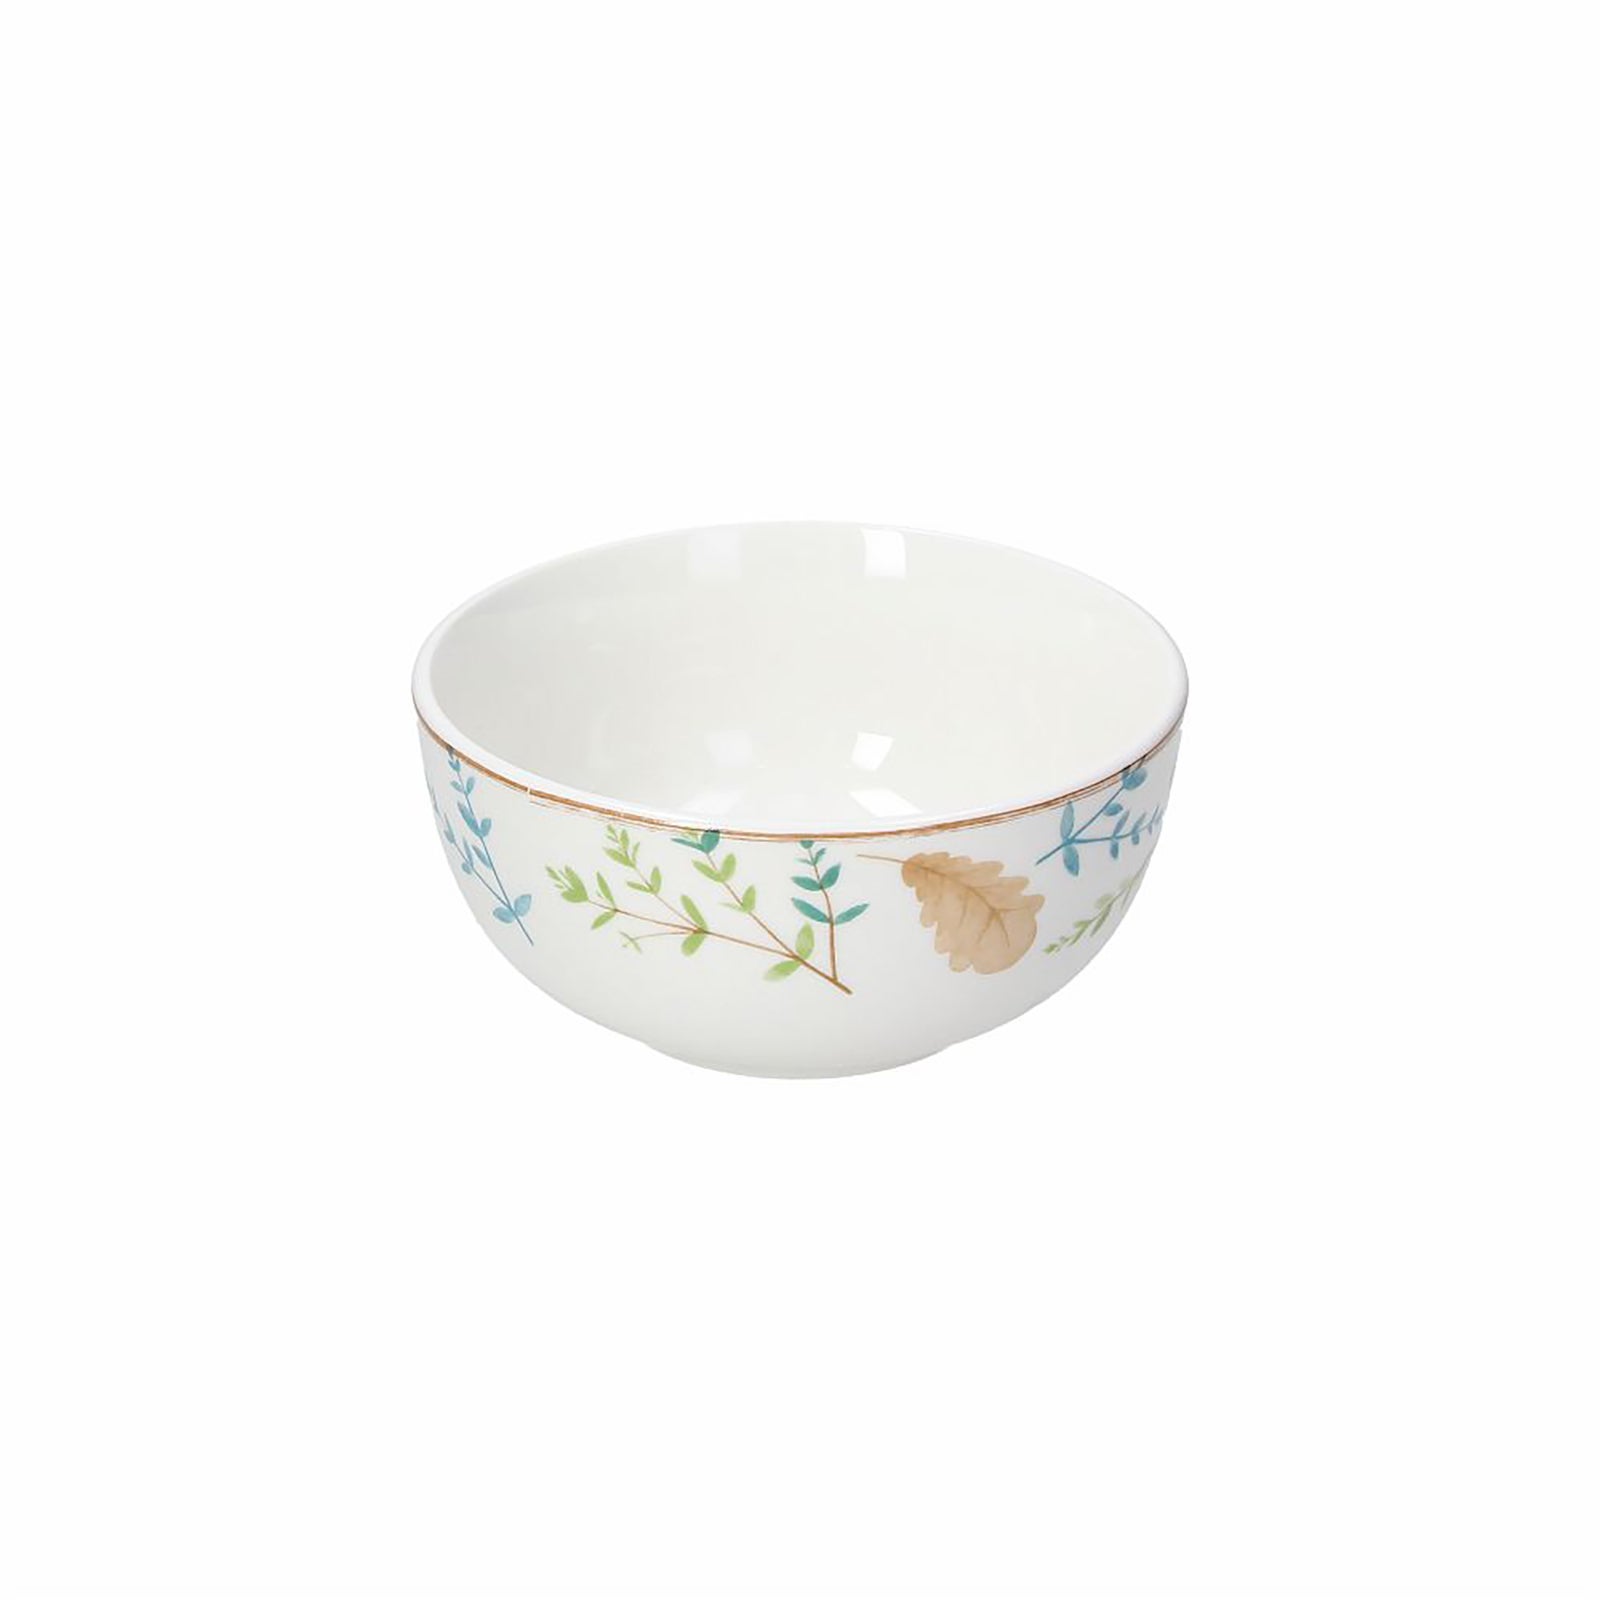 Floral Gaia Porcelain Bowl, Set Of 6, White/blue/tan